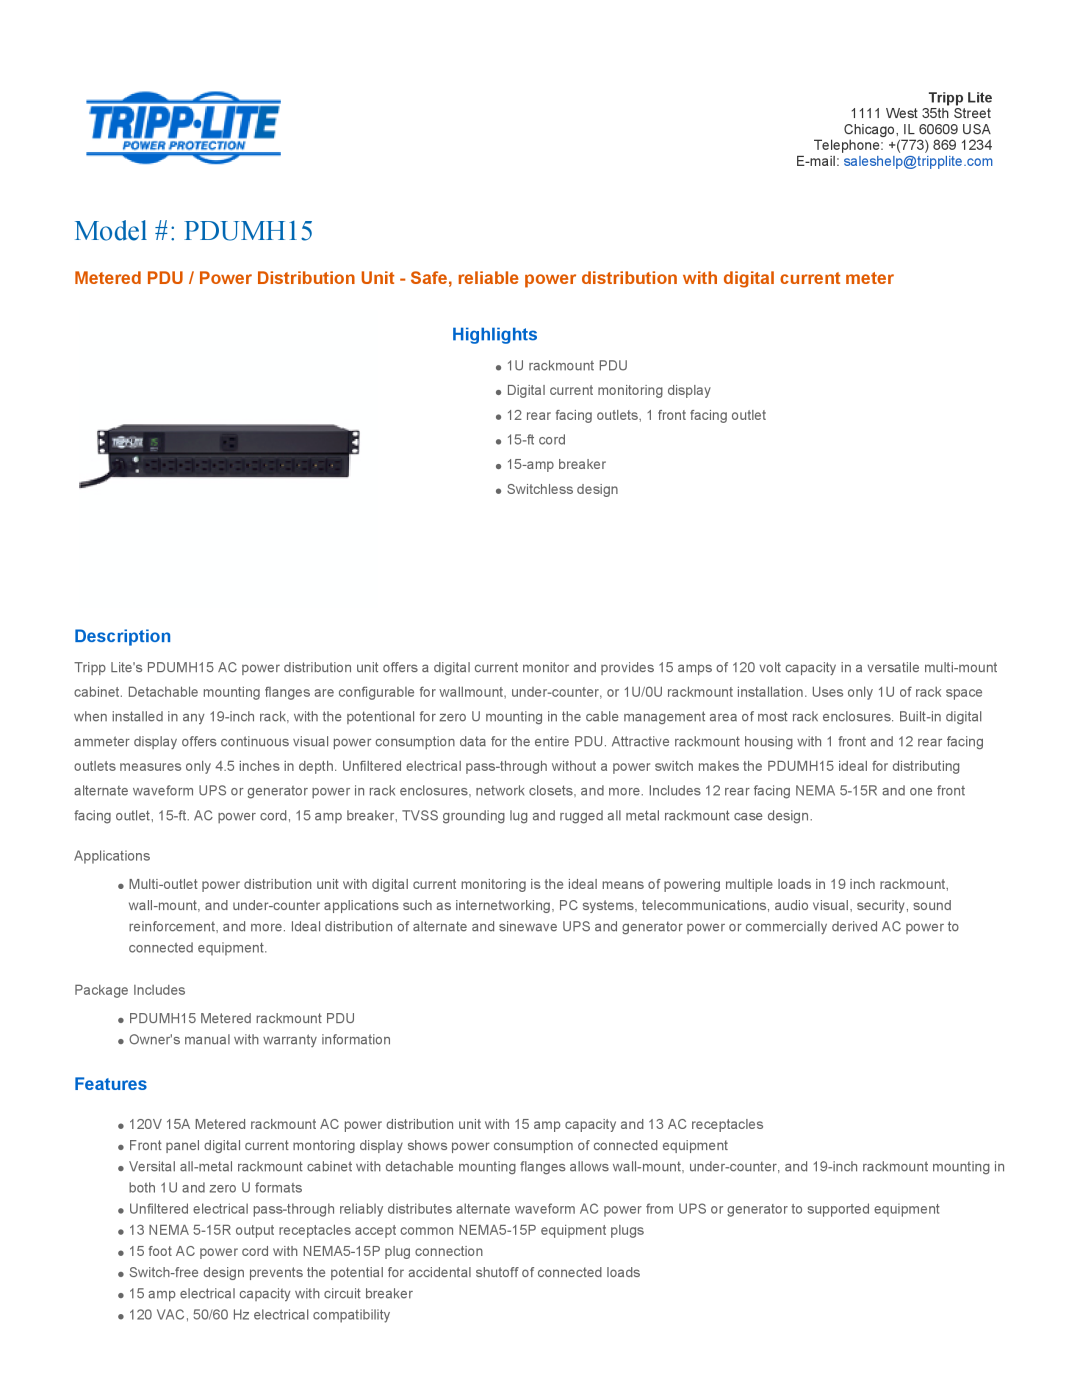 Tripp Lite owner manual Highlights, Description, Features, Model # PDUMH15 